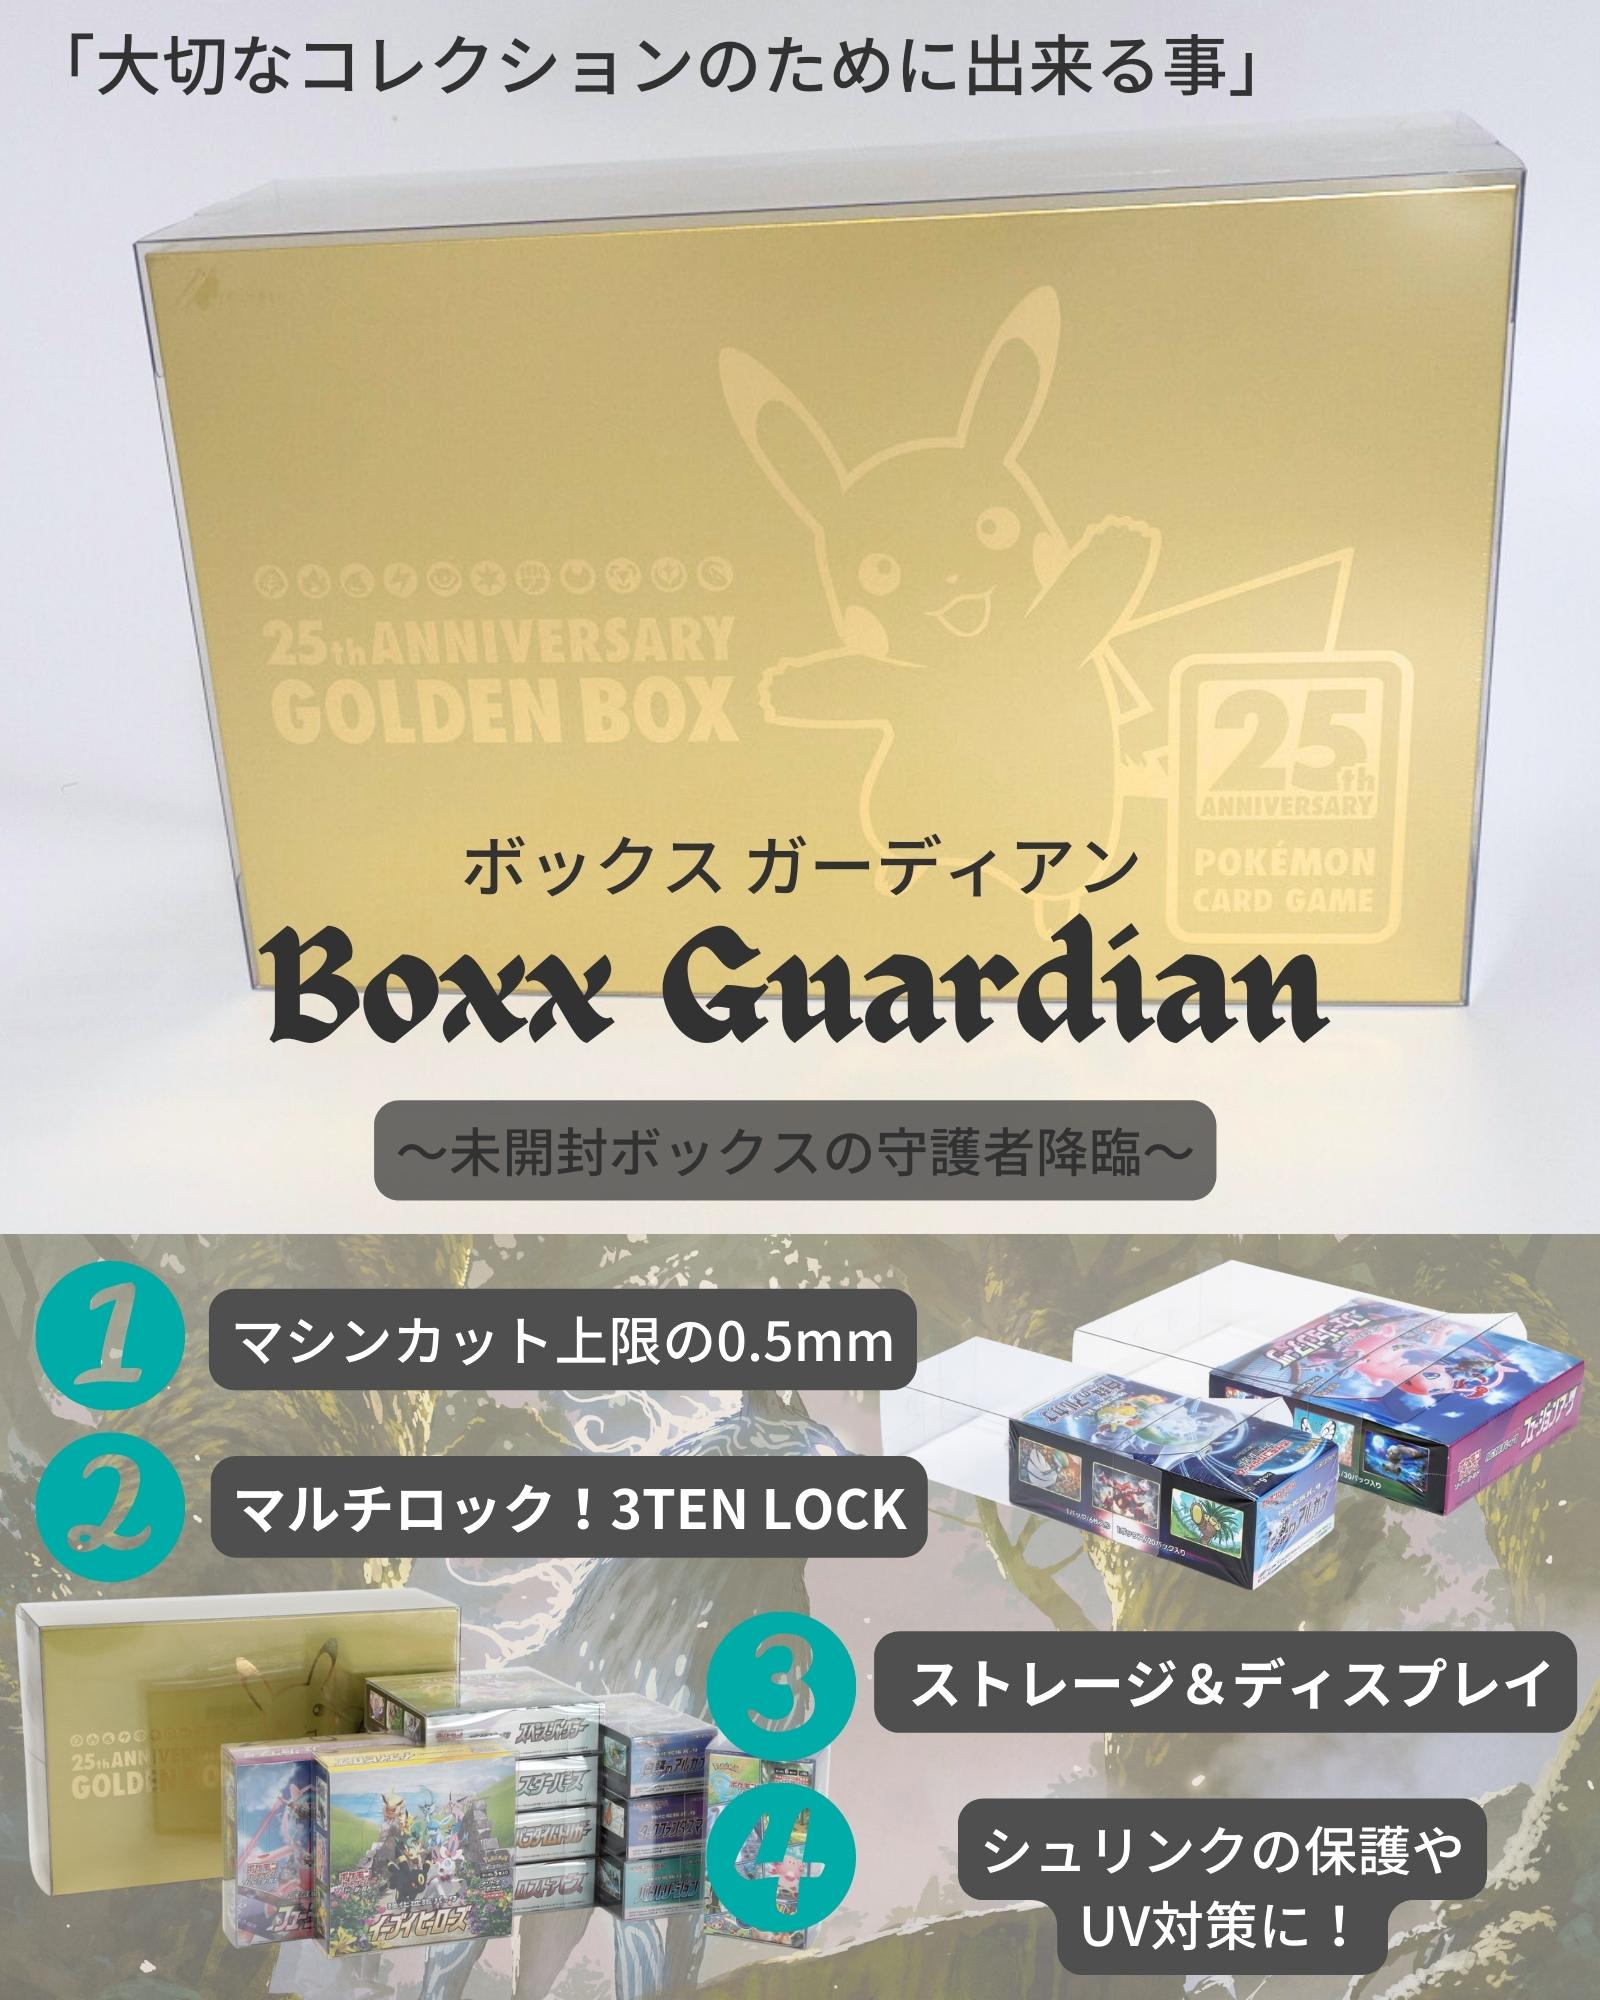 Boxx Guardian ポケモンカードBOX用 25th ANNIVERSARY GOLDEN BOX ...